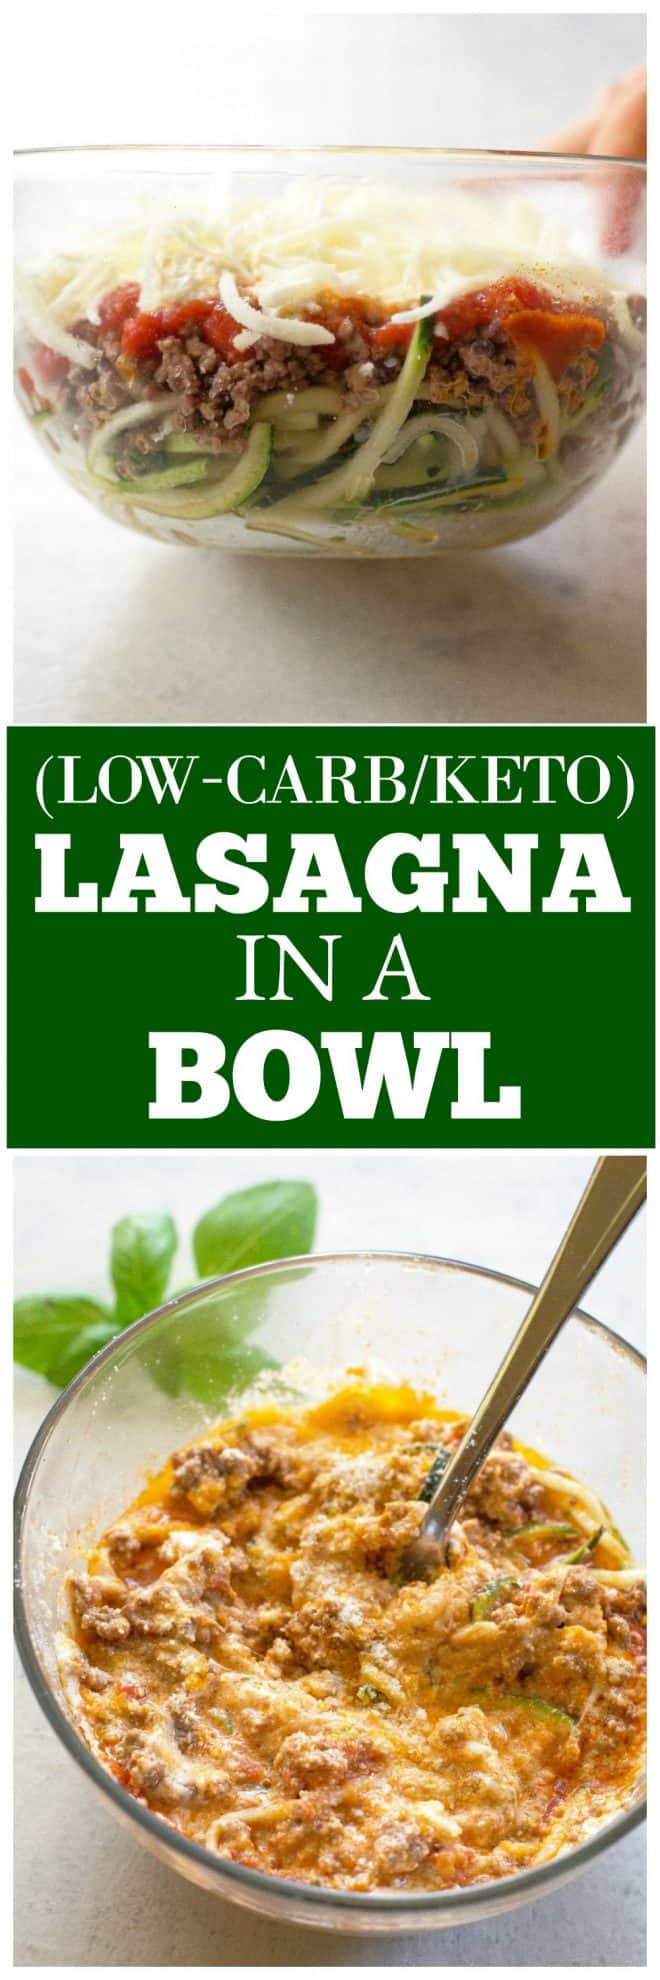 Lasagna in a Bowl